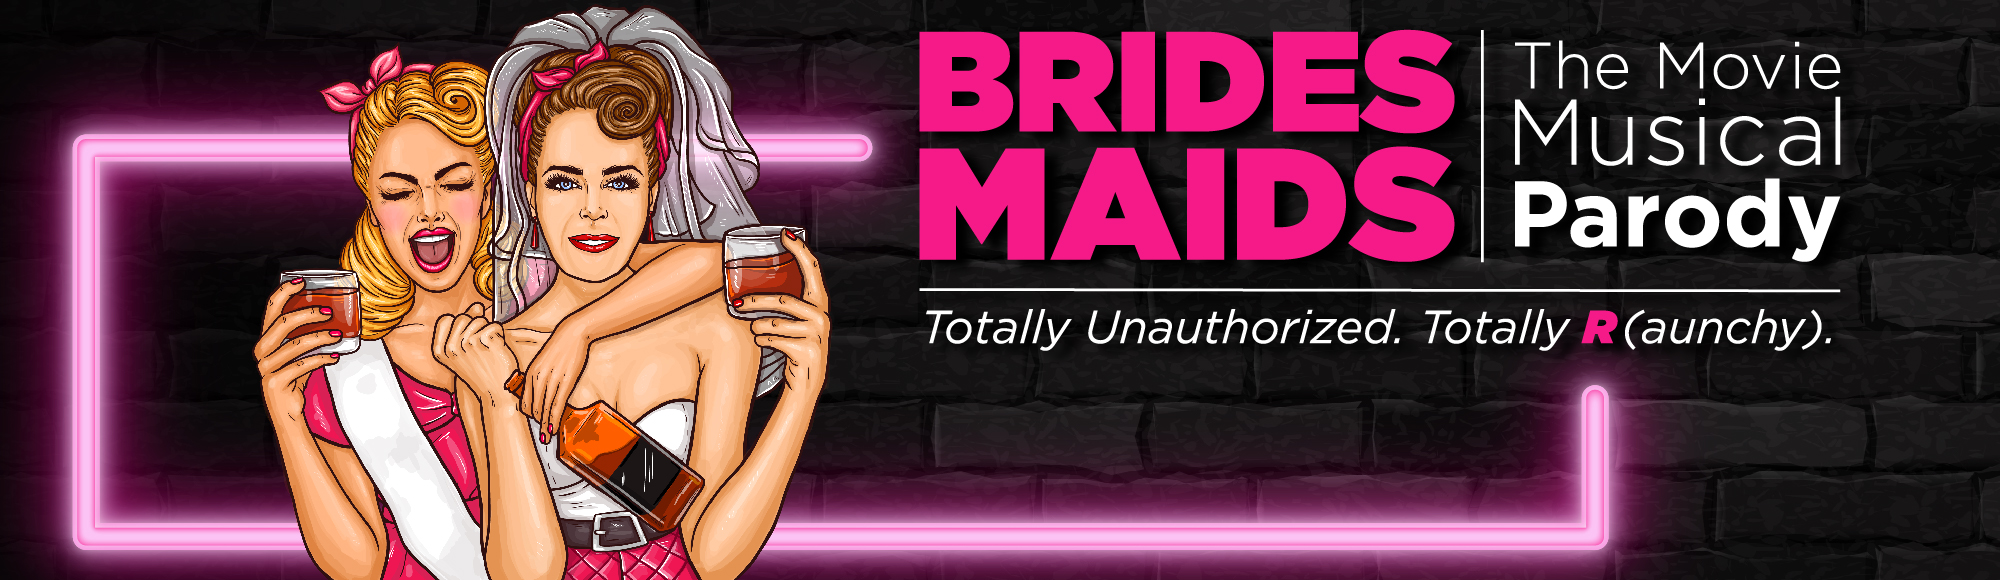 Bridesmaids: The Unauthorized Movie Musical Parody show